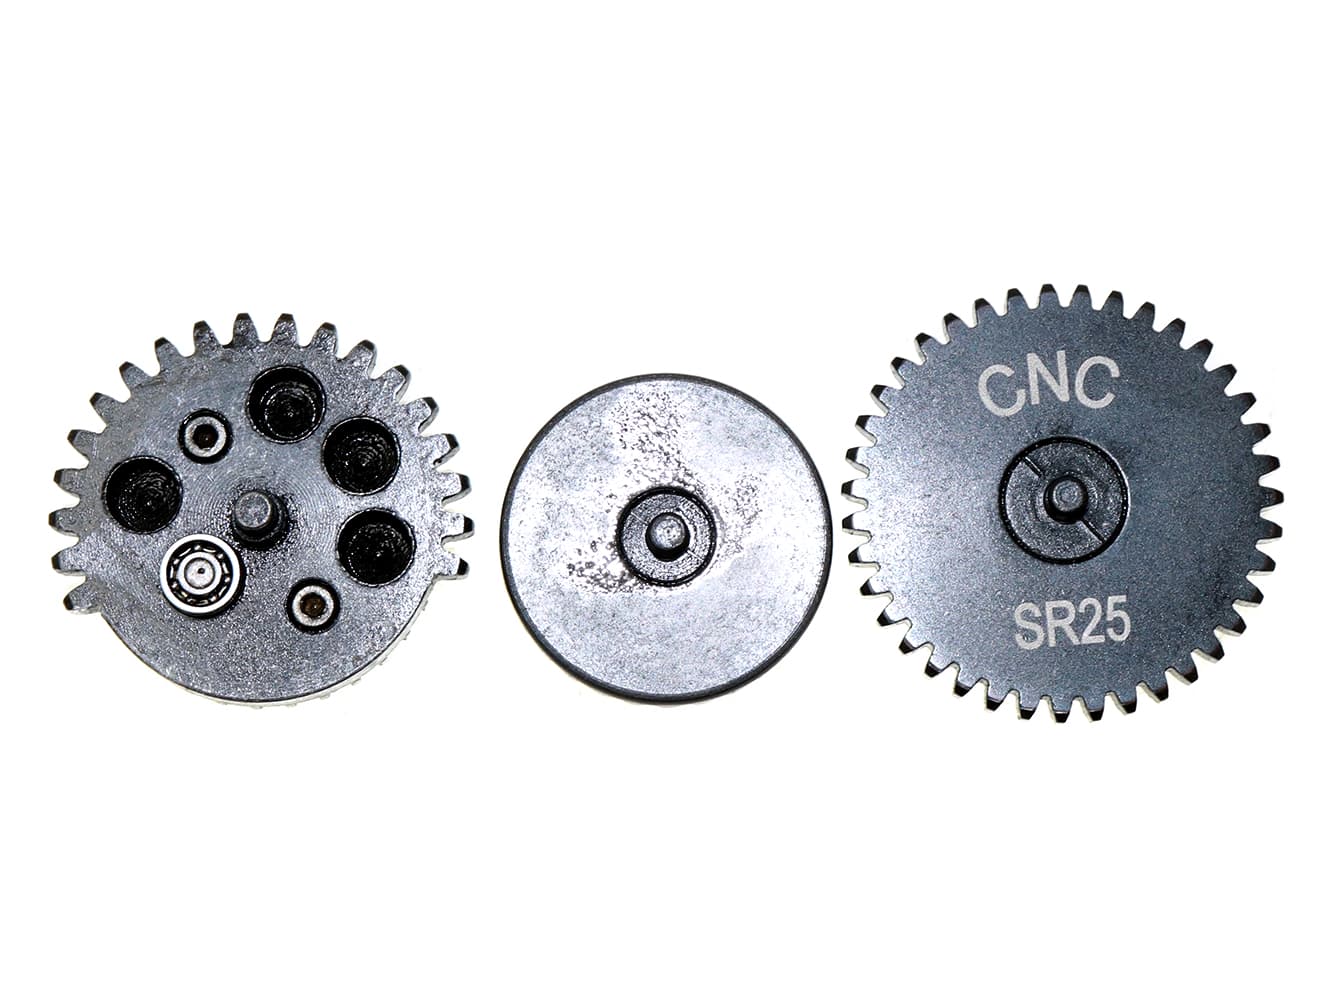 CNC Production 18:1 スチールCNCギアセット for SR25